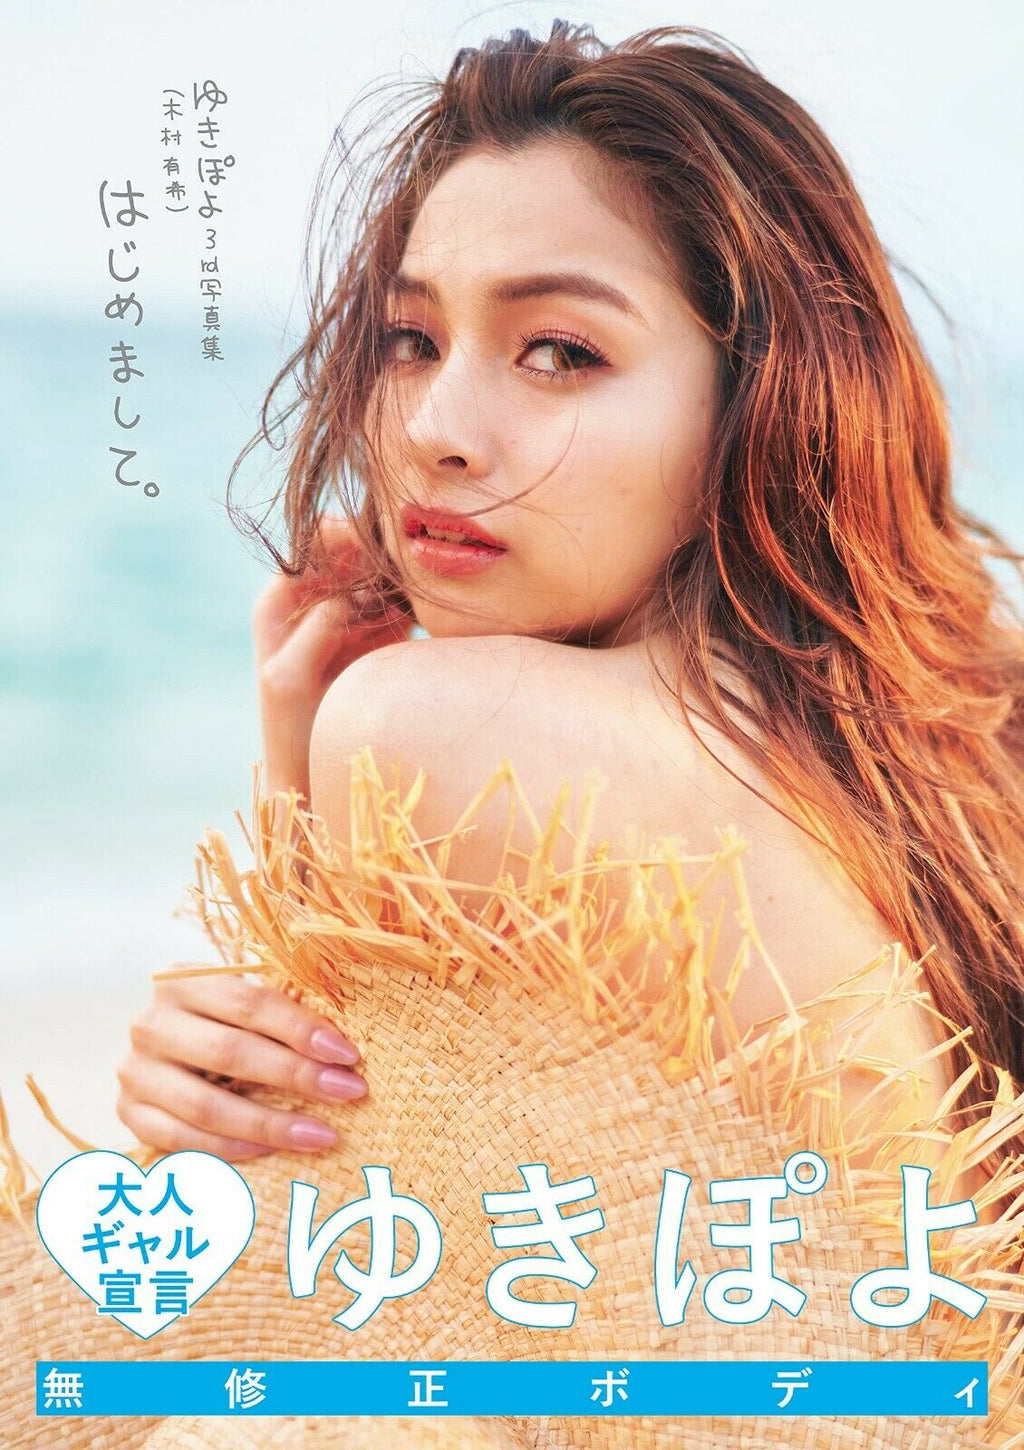 NEW' Yuki Kimura 3rd Photo Book | Japan Yukipoyo Model